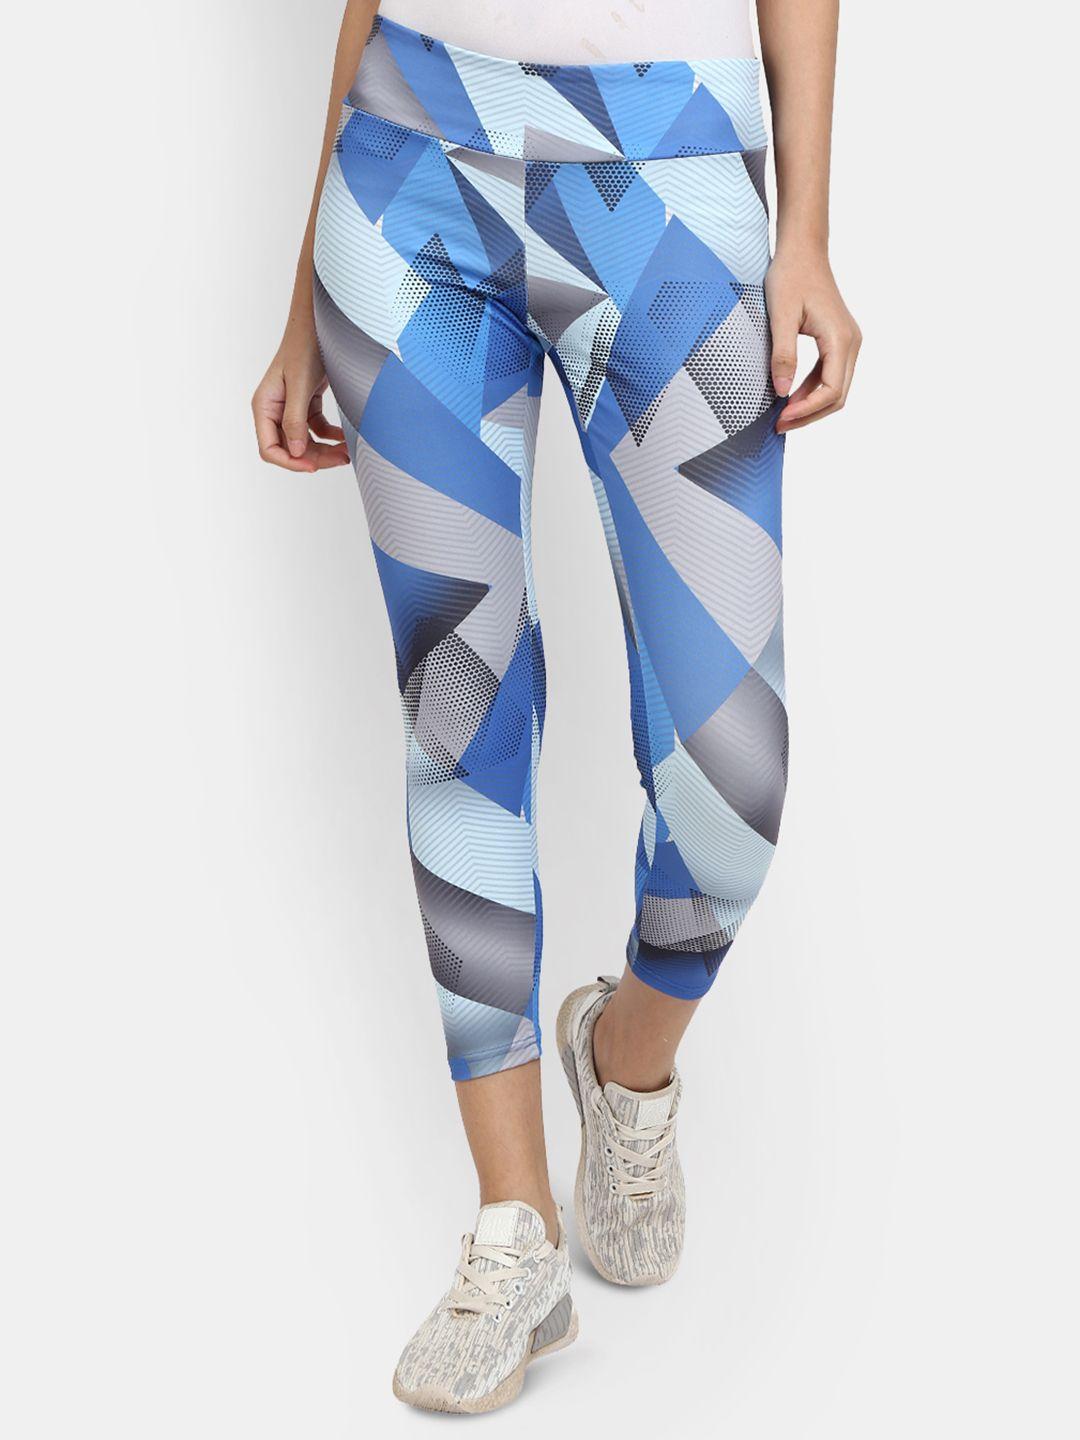 v-mart women blue & white geometric printed ankle-length tights